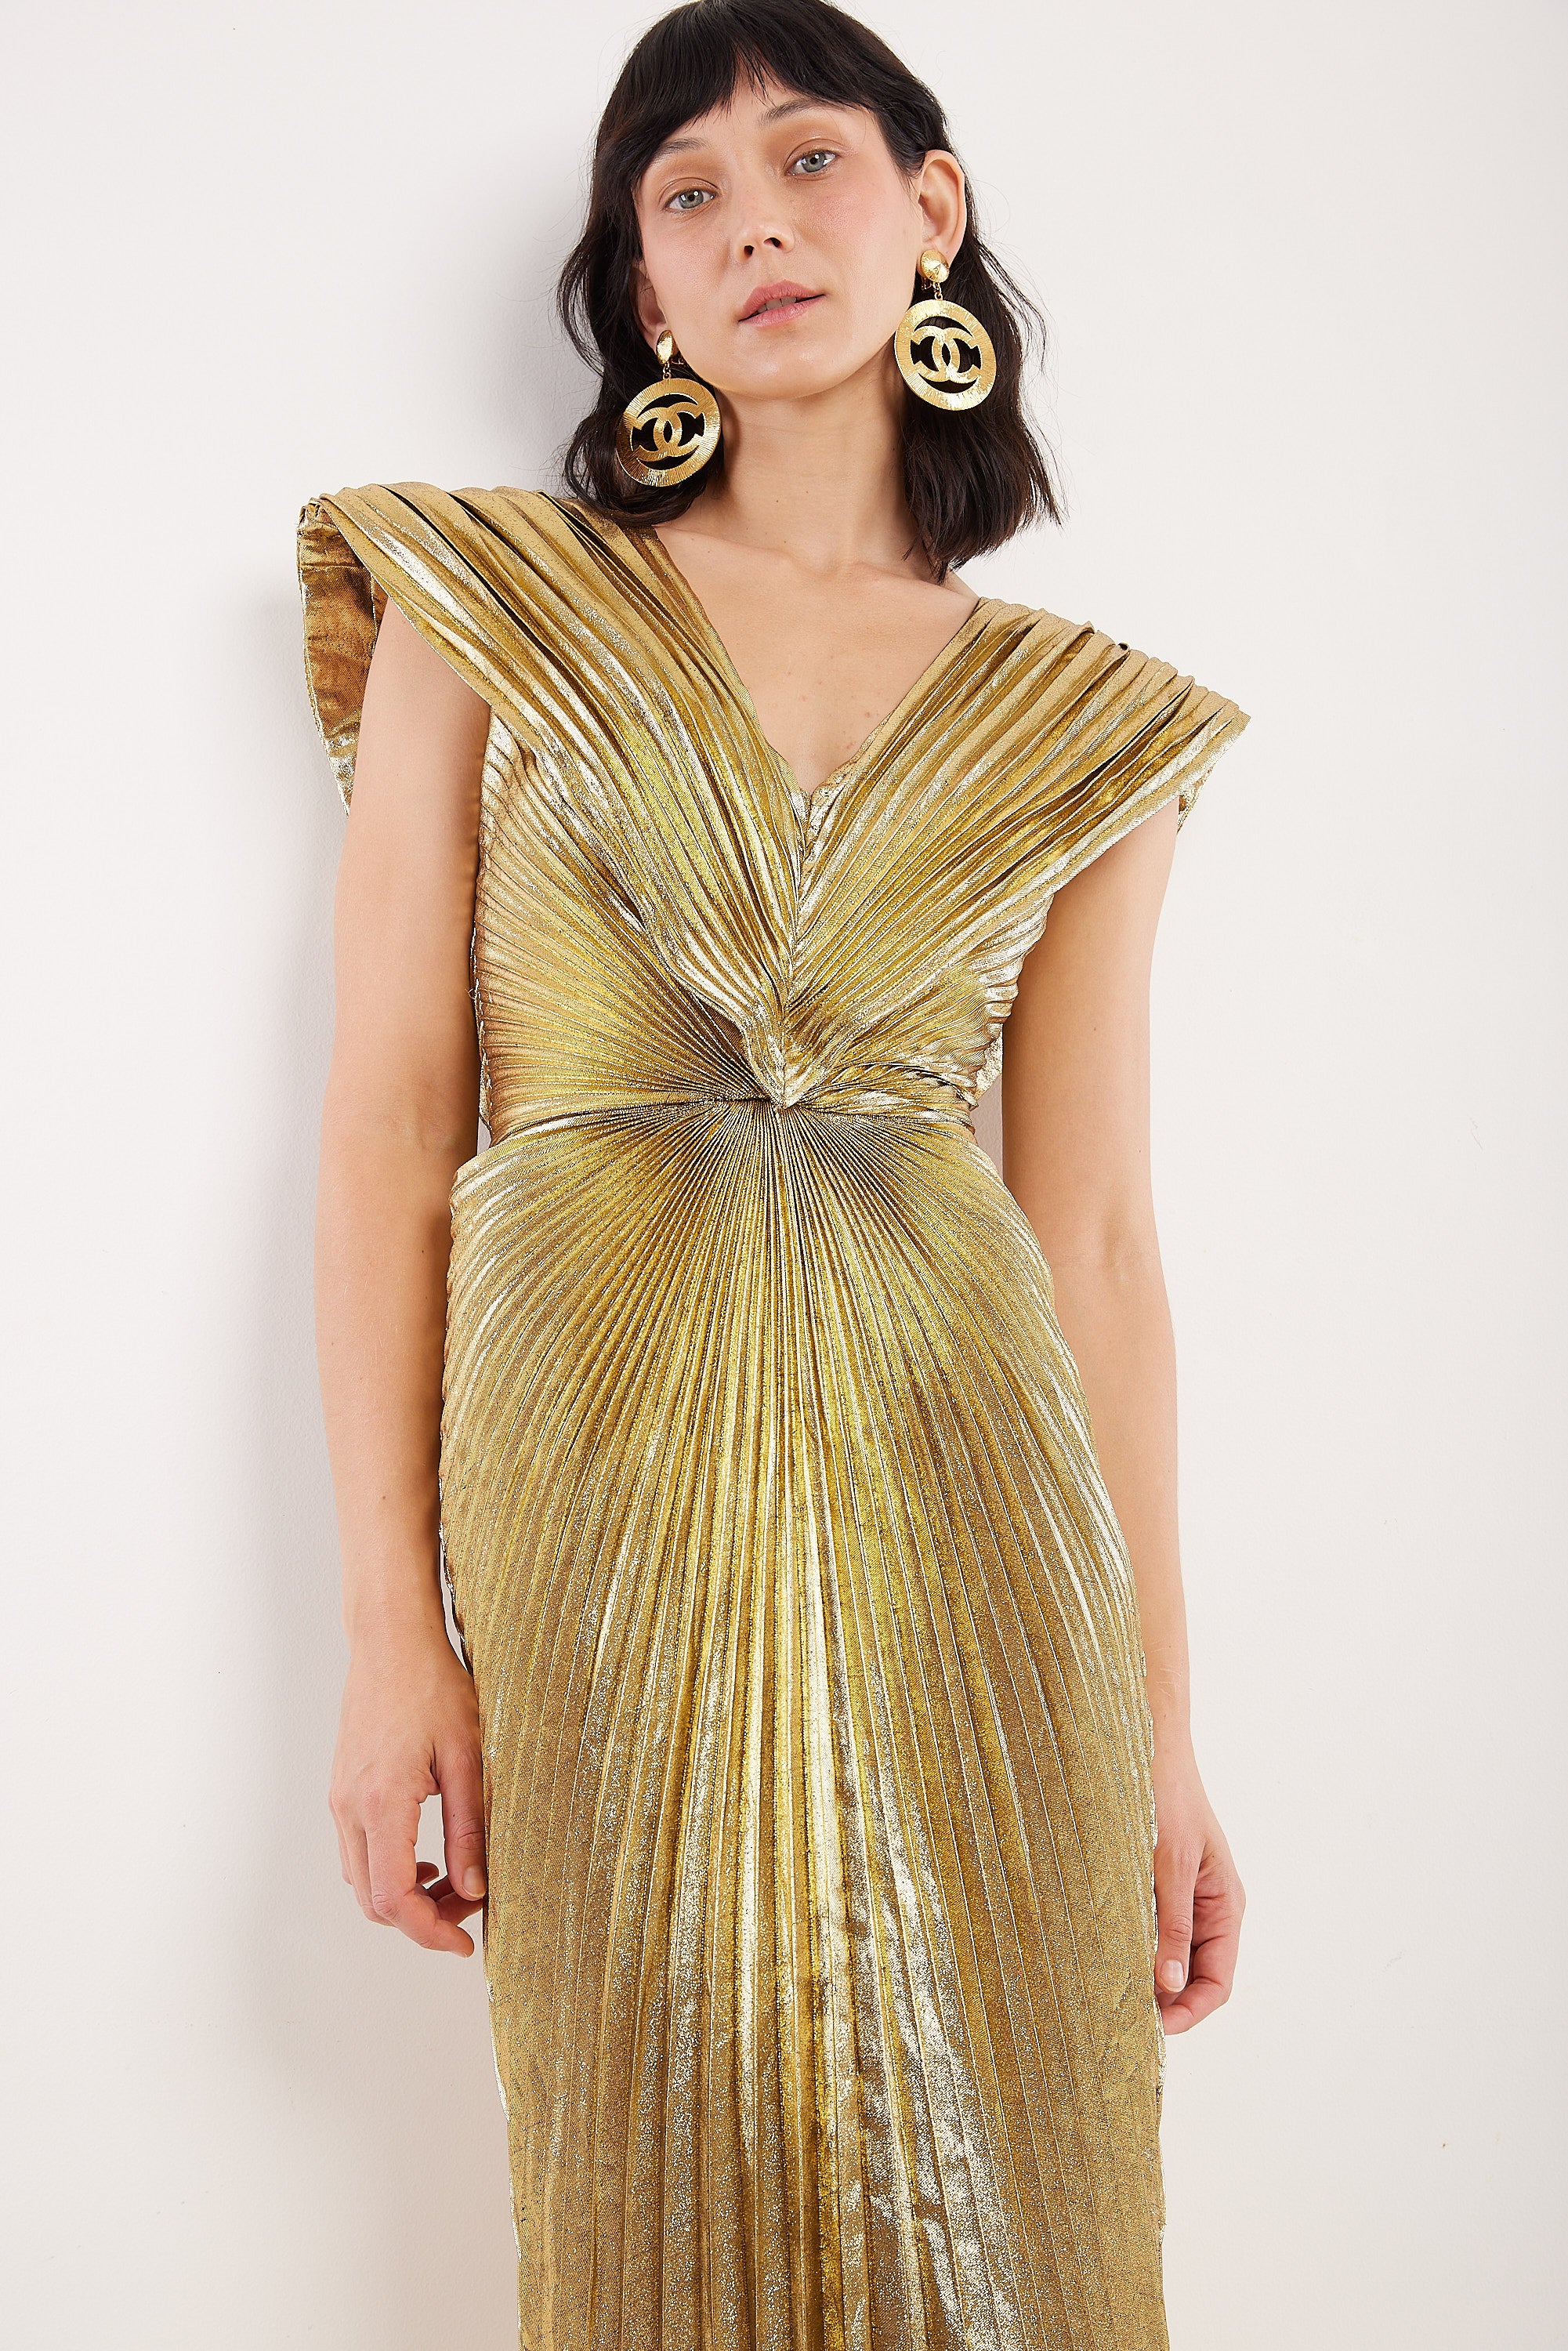 Loris Azzaro <br> c1988 gold lamé sunray pleated gown